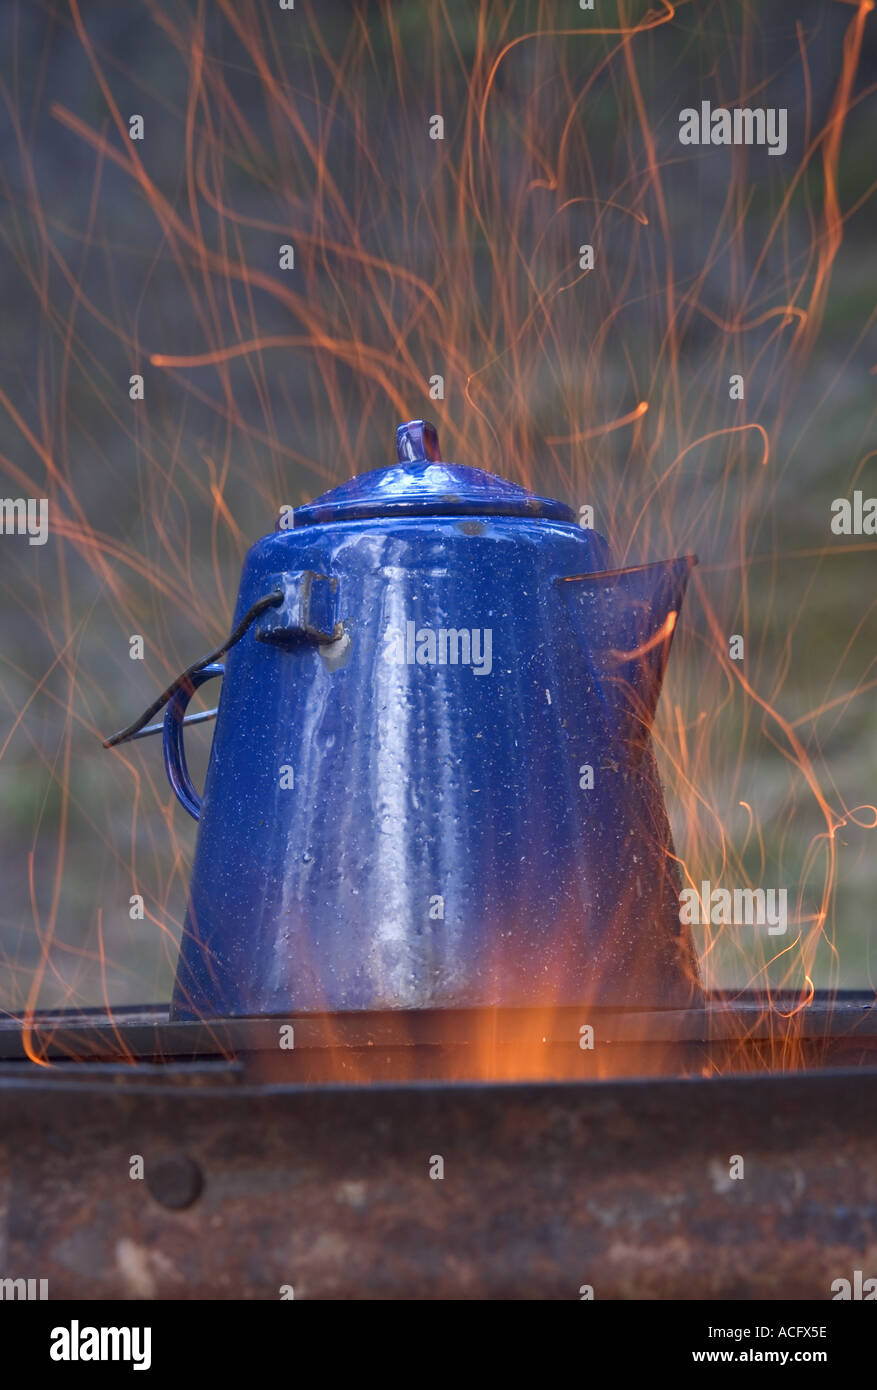 https://c8.alamy.com/comp/ACFX5E/kettle-overtop-of-campfire-ACFX5E.jpg